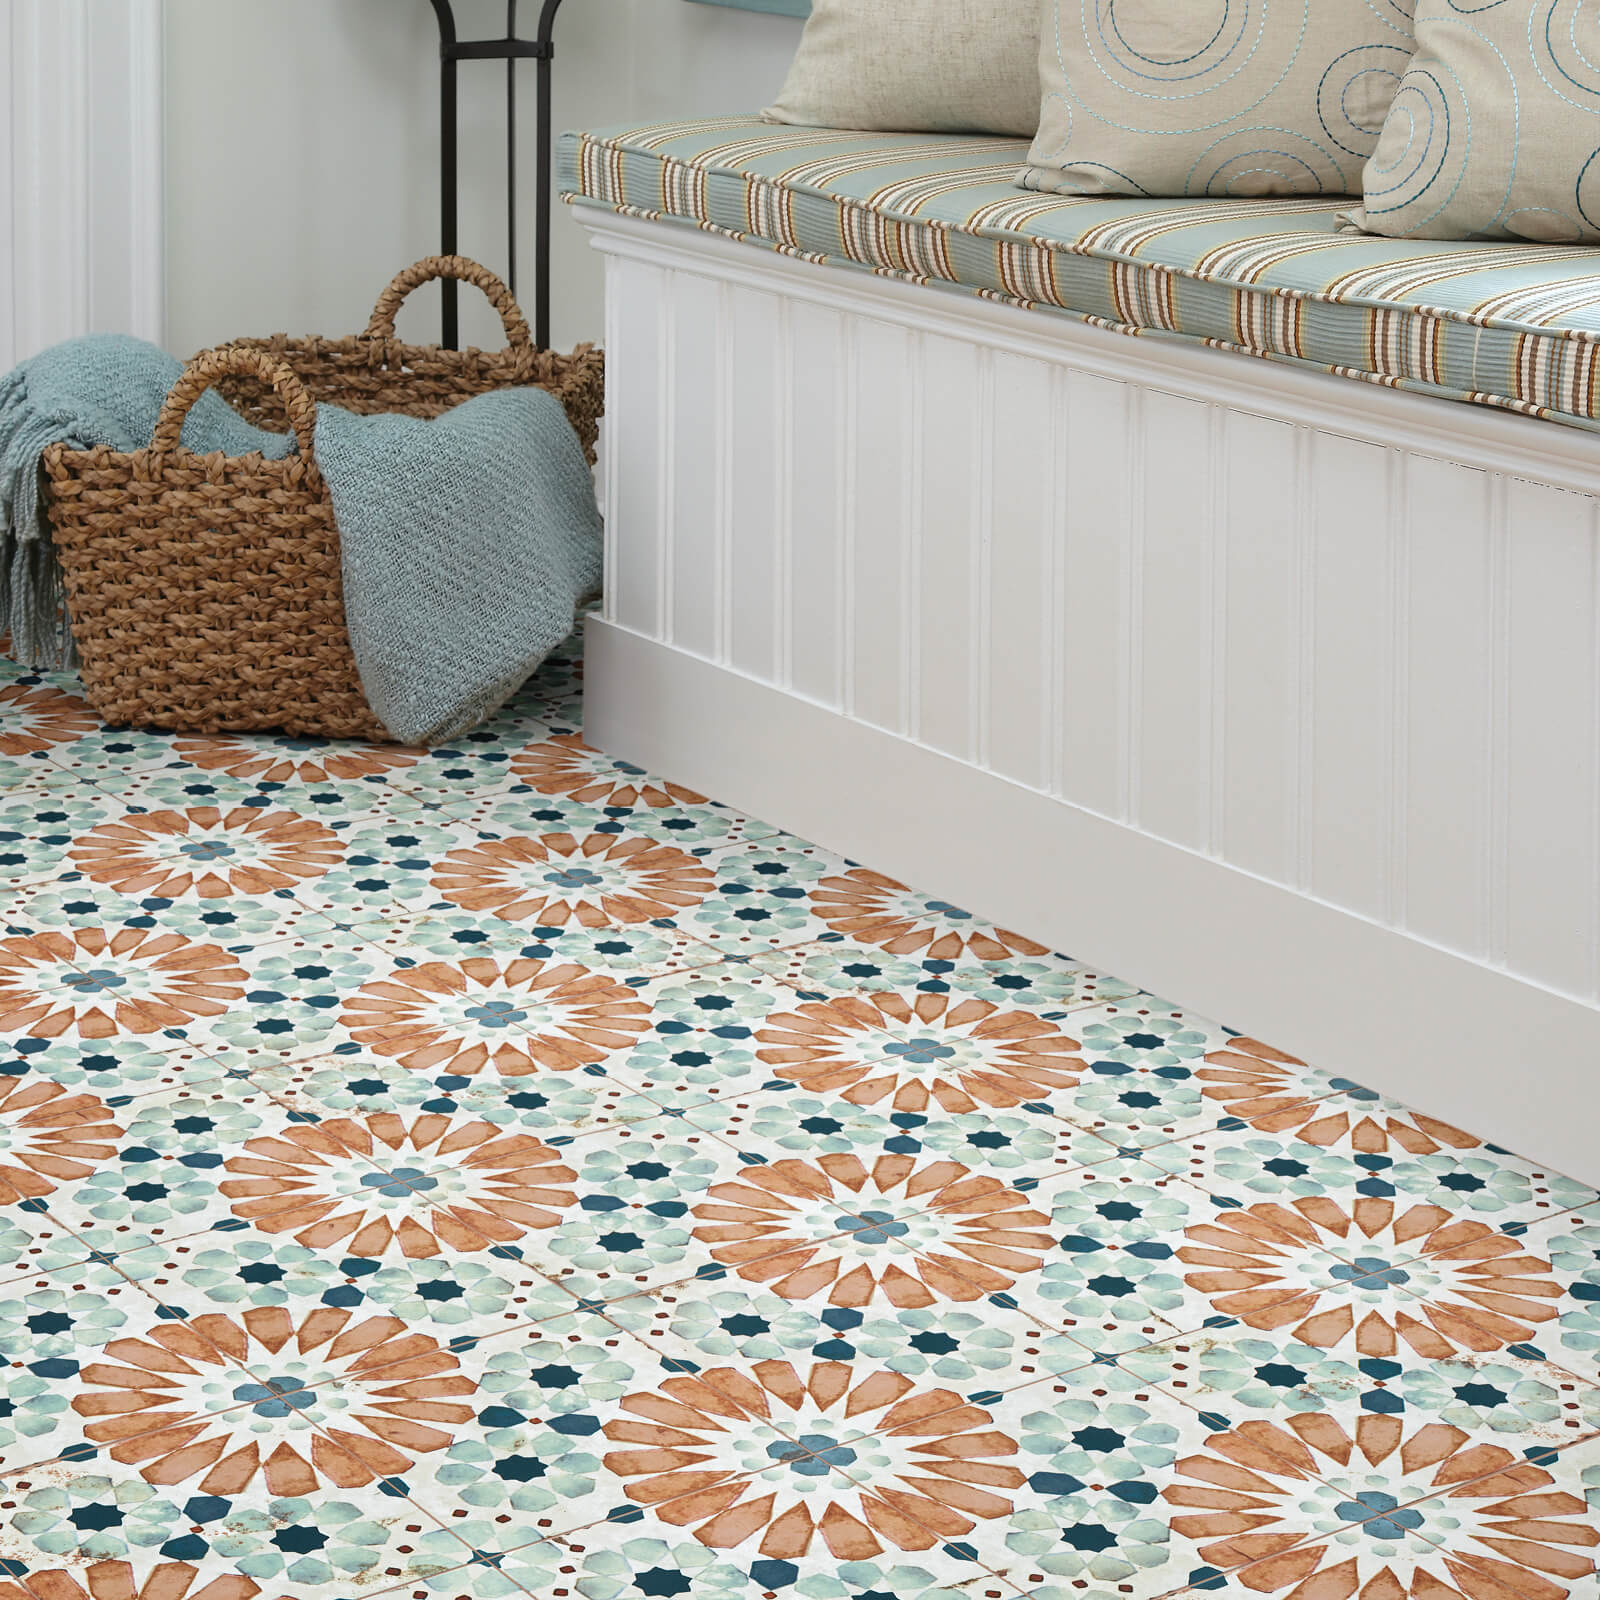 Islander tiles | AJ Rose Carpets